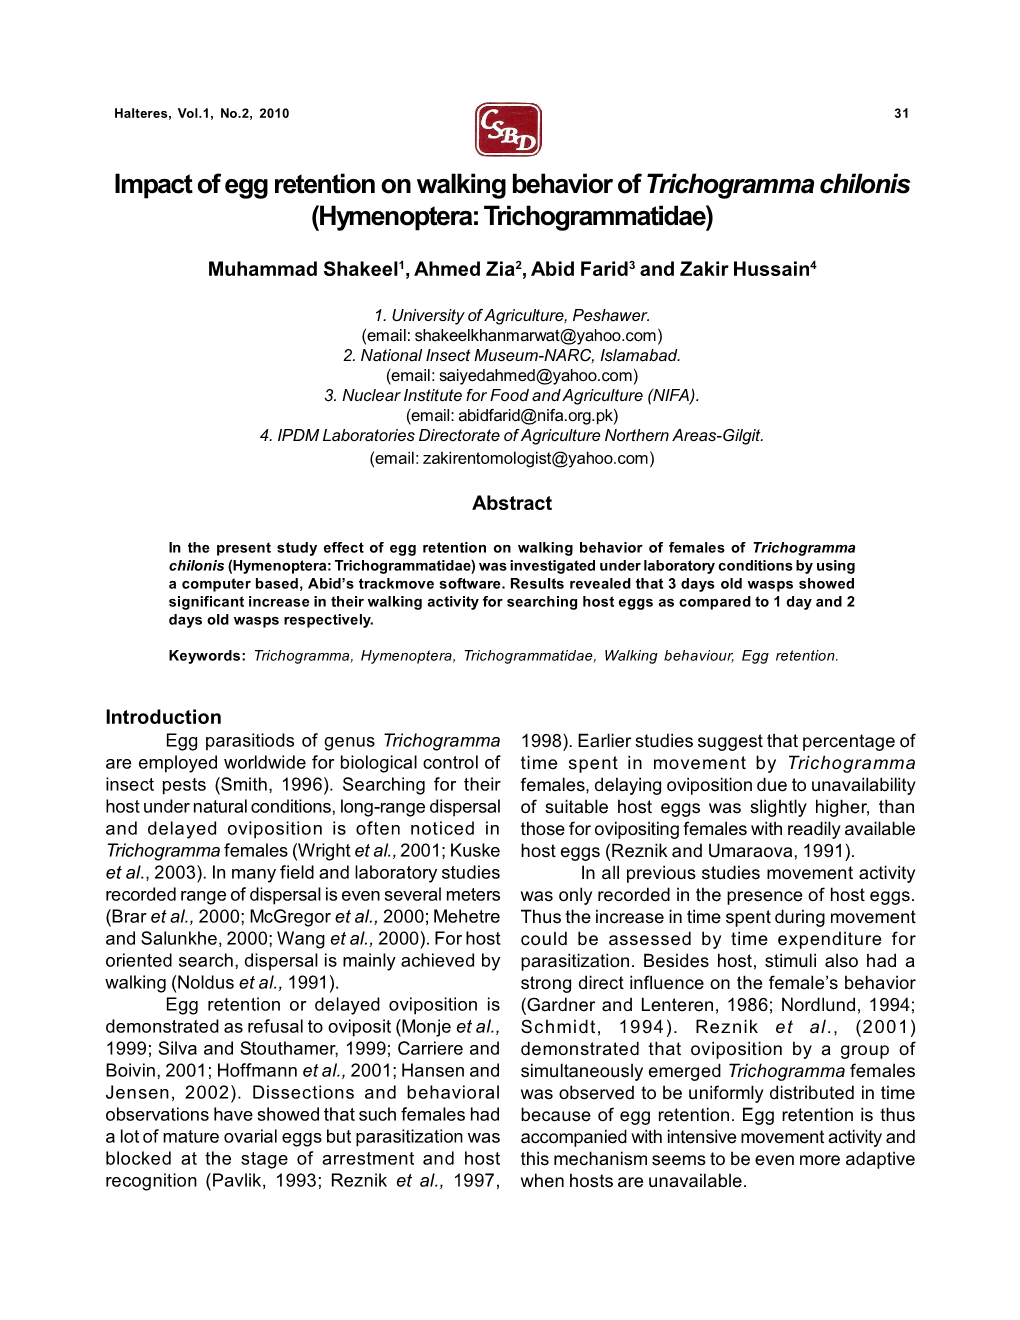 Impact of Egg Retention on Walking Behavior of Trichogramma Chilonis (Hymenoptera: Trichogrammatidae)